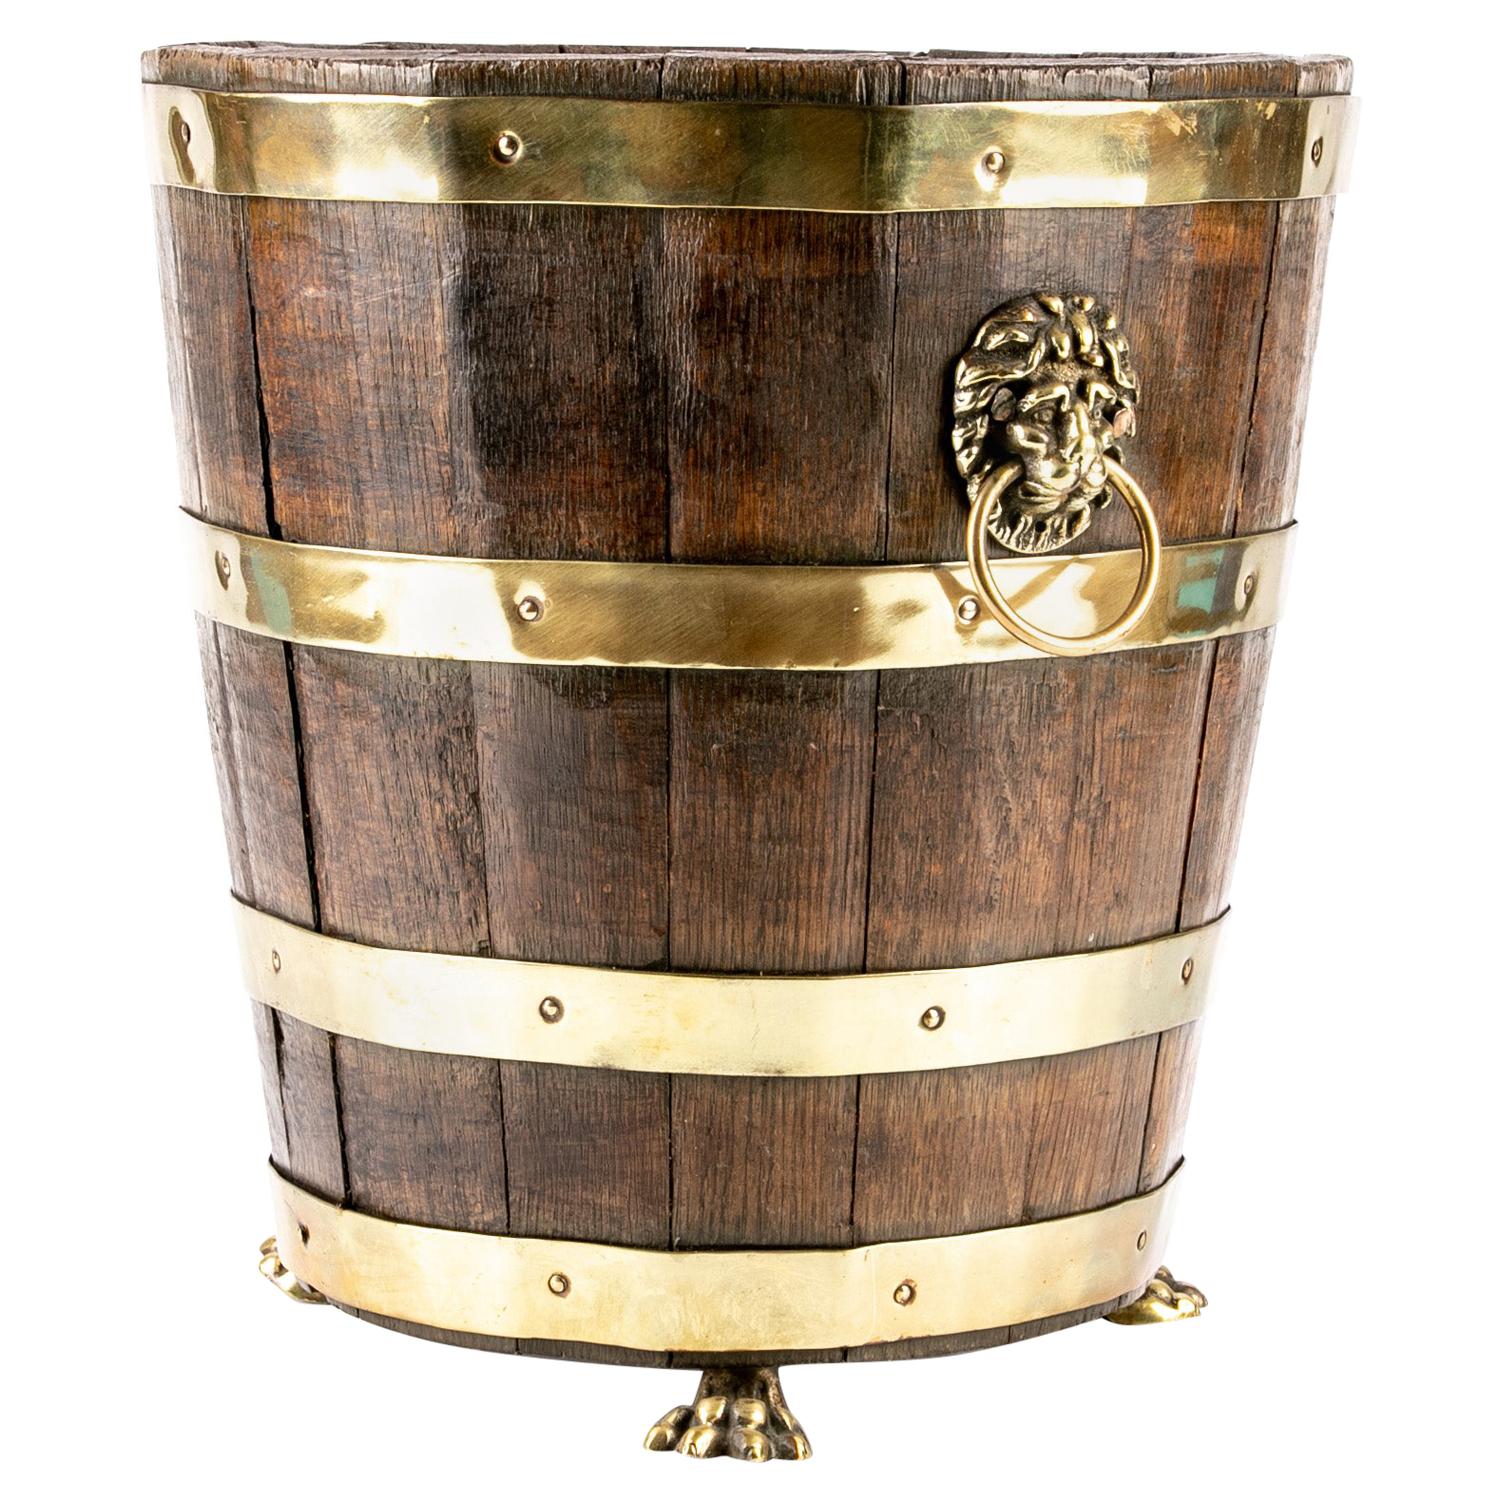 Early 19th Century English Regency Wine Bucket, circa 1810-1820